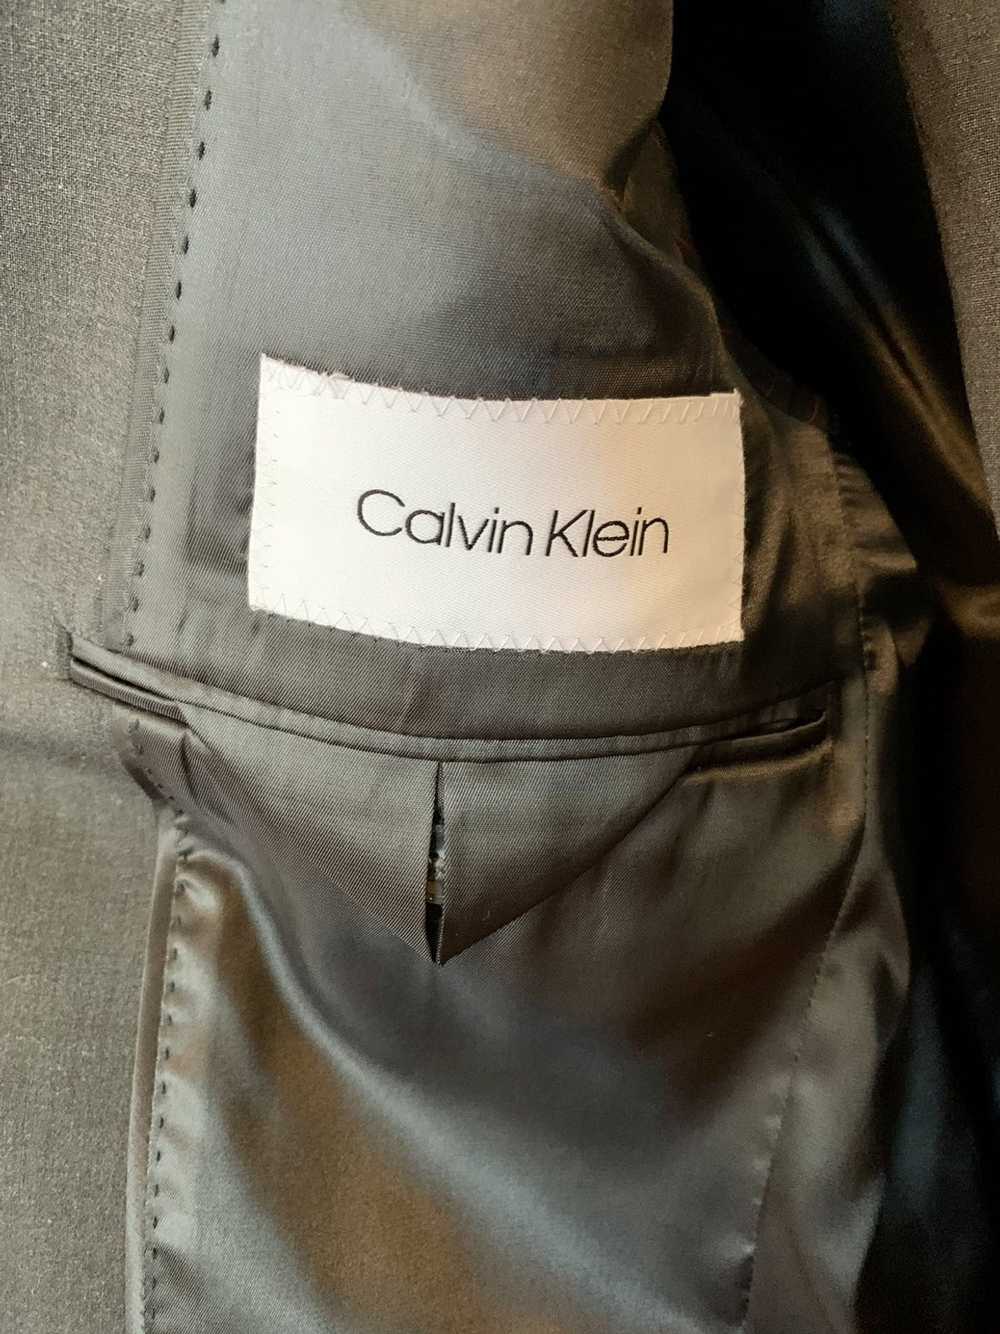 Calvin Klein Calvin Klein charcoal suit 36R slim … - image 3